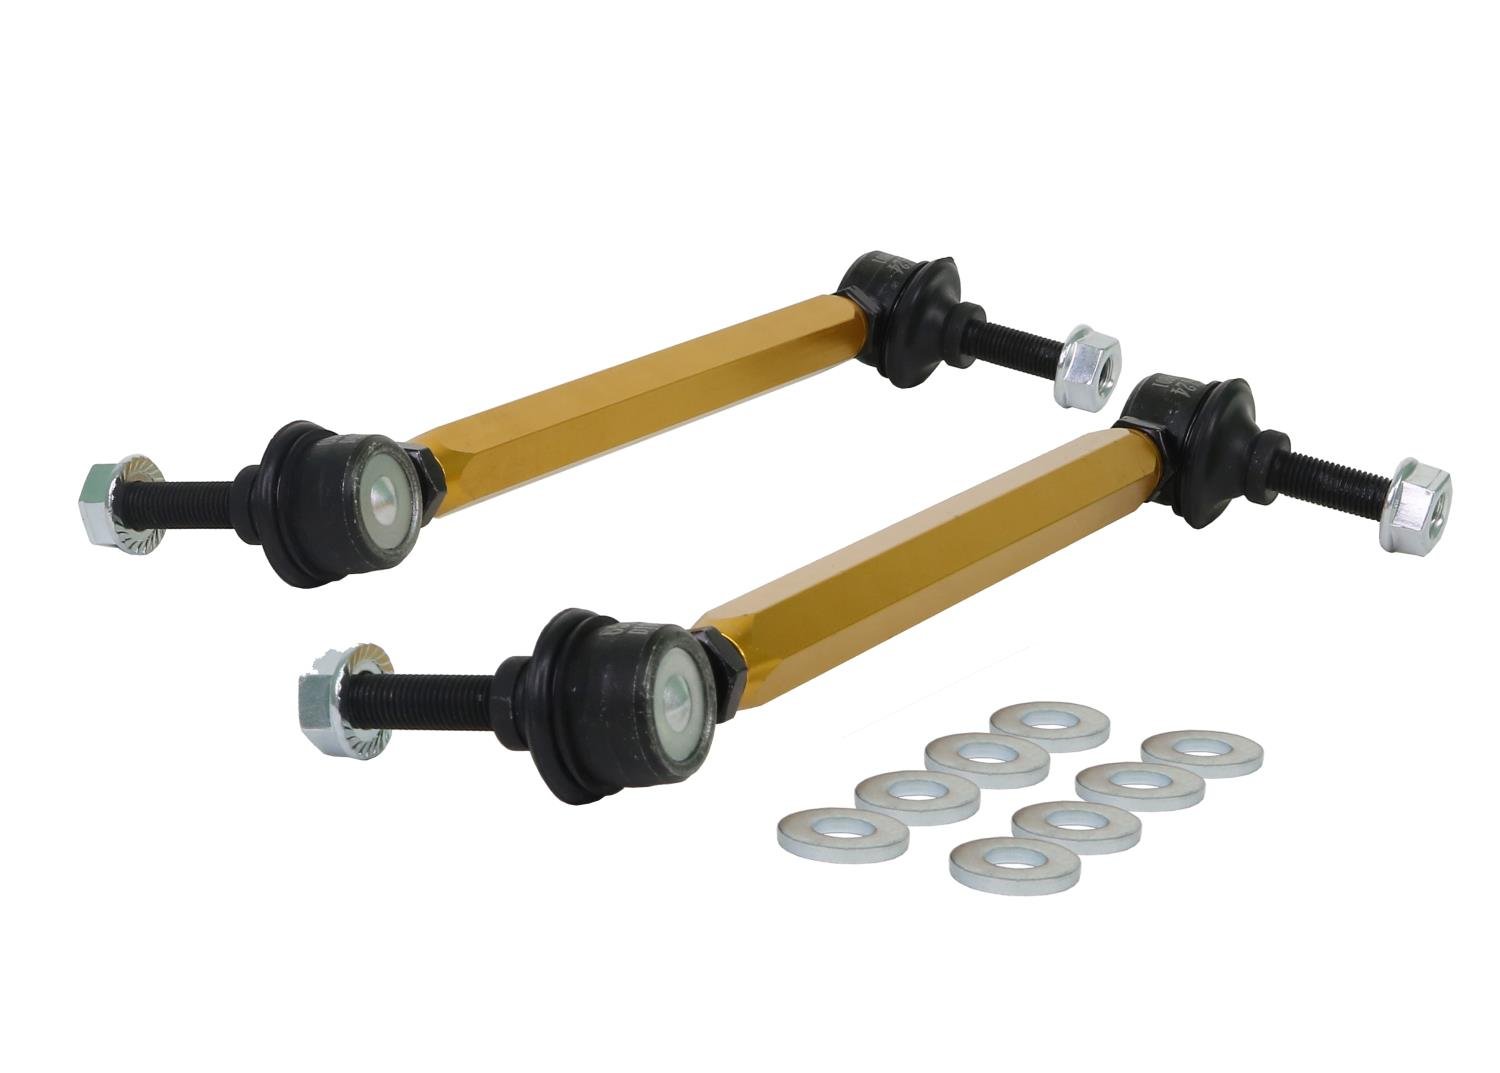 KLC140-255 Universal Sway Bar Link Kit -Heavy Duty Adjustable 10 mm Ball/Ball Style